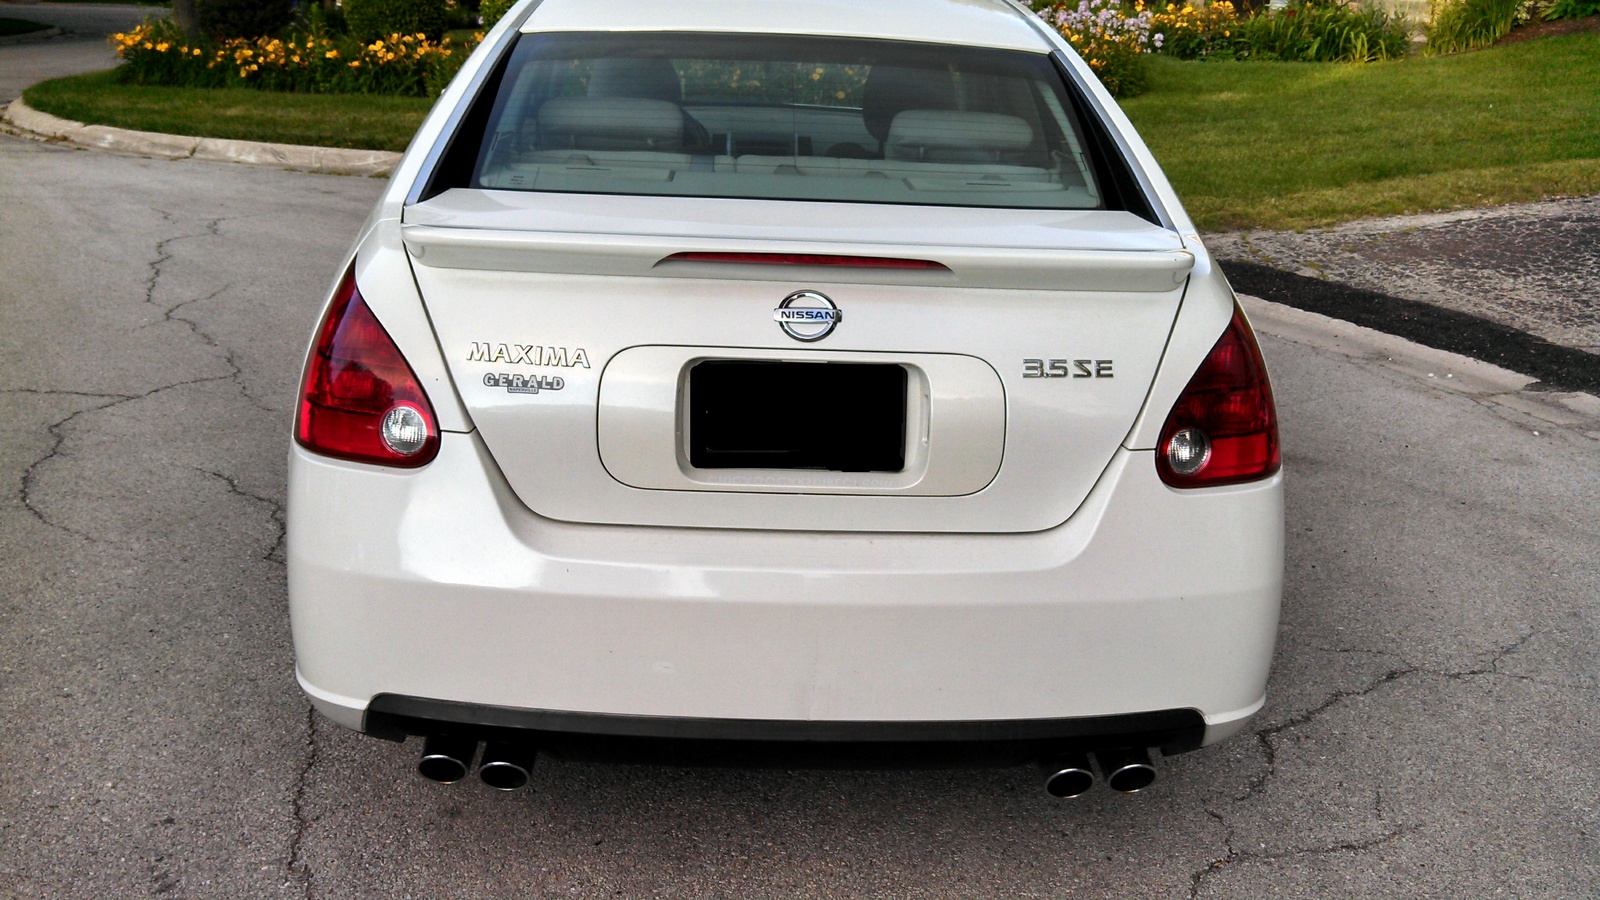 2007 Nissan maxima se review #3